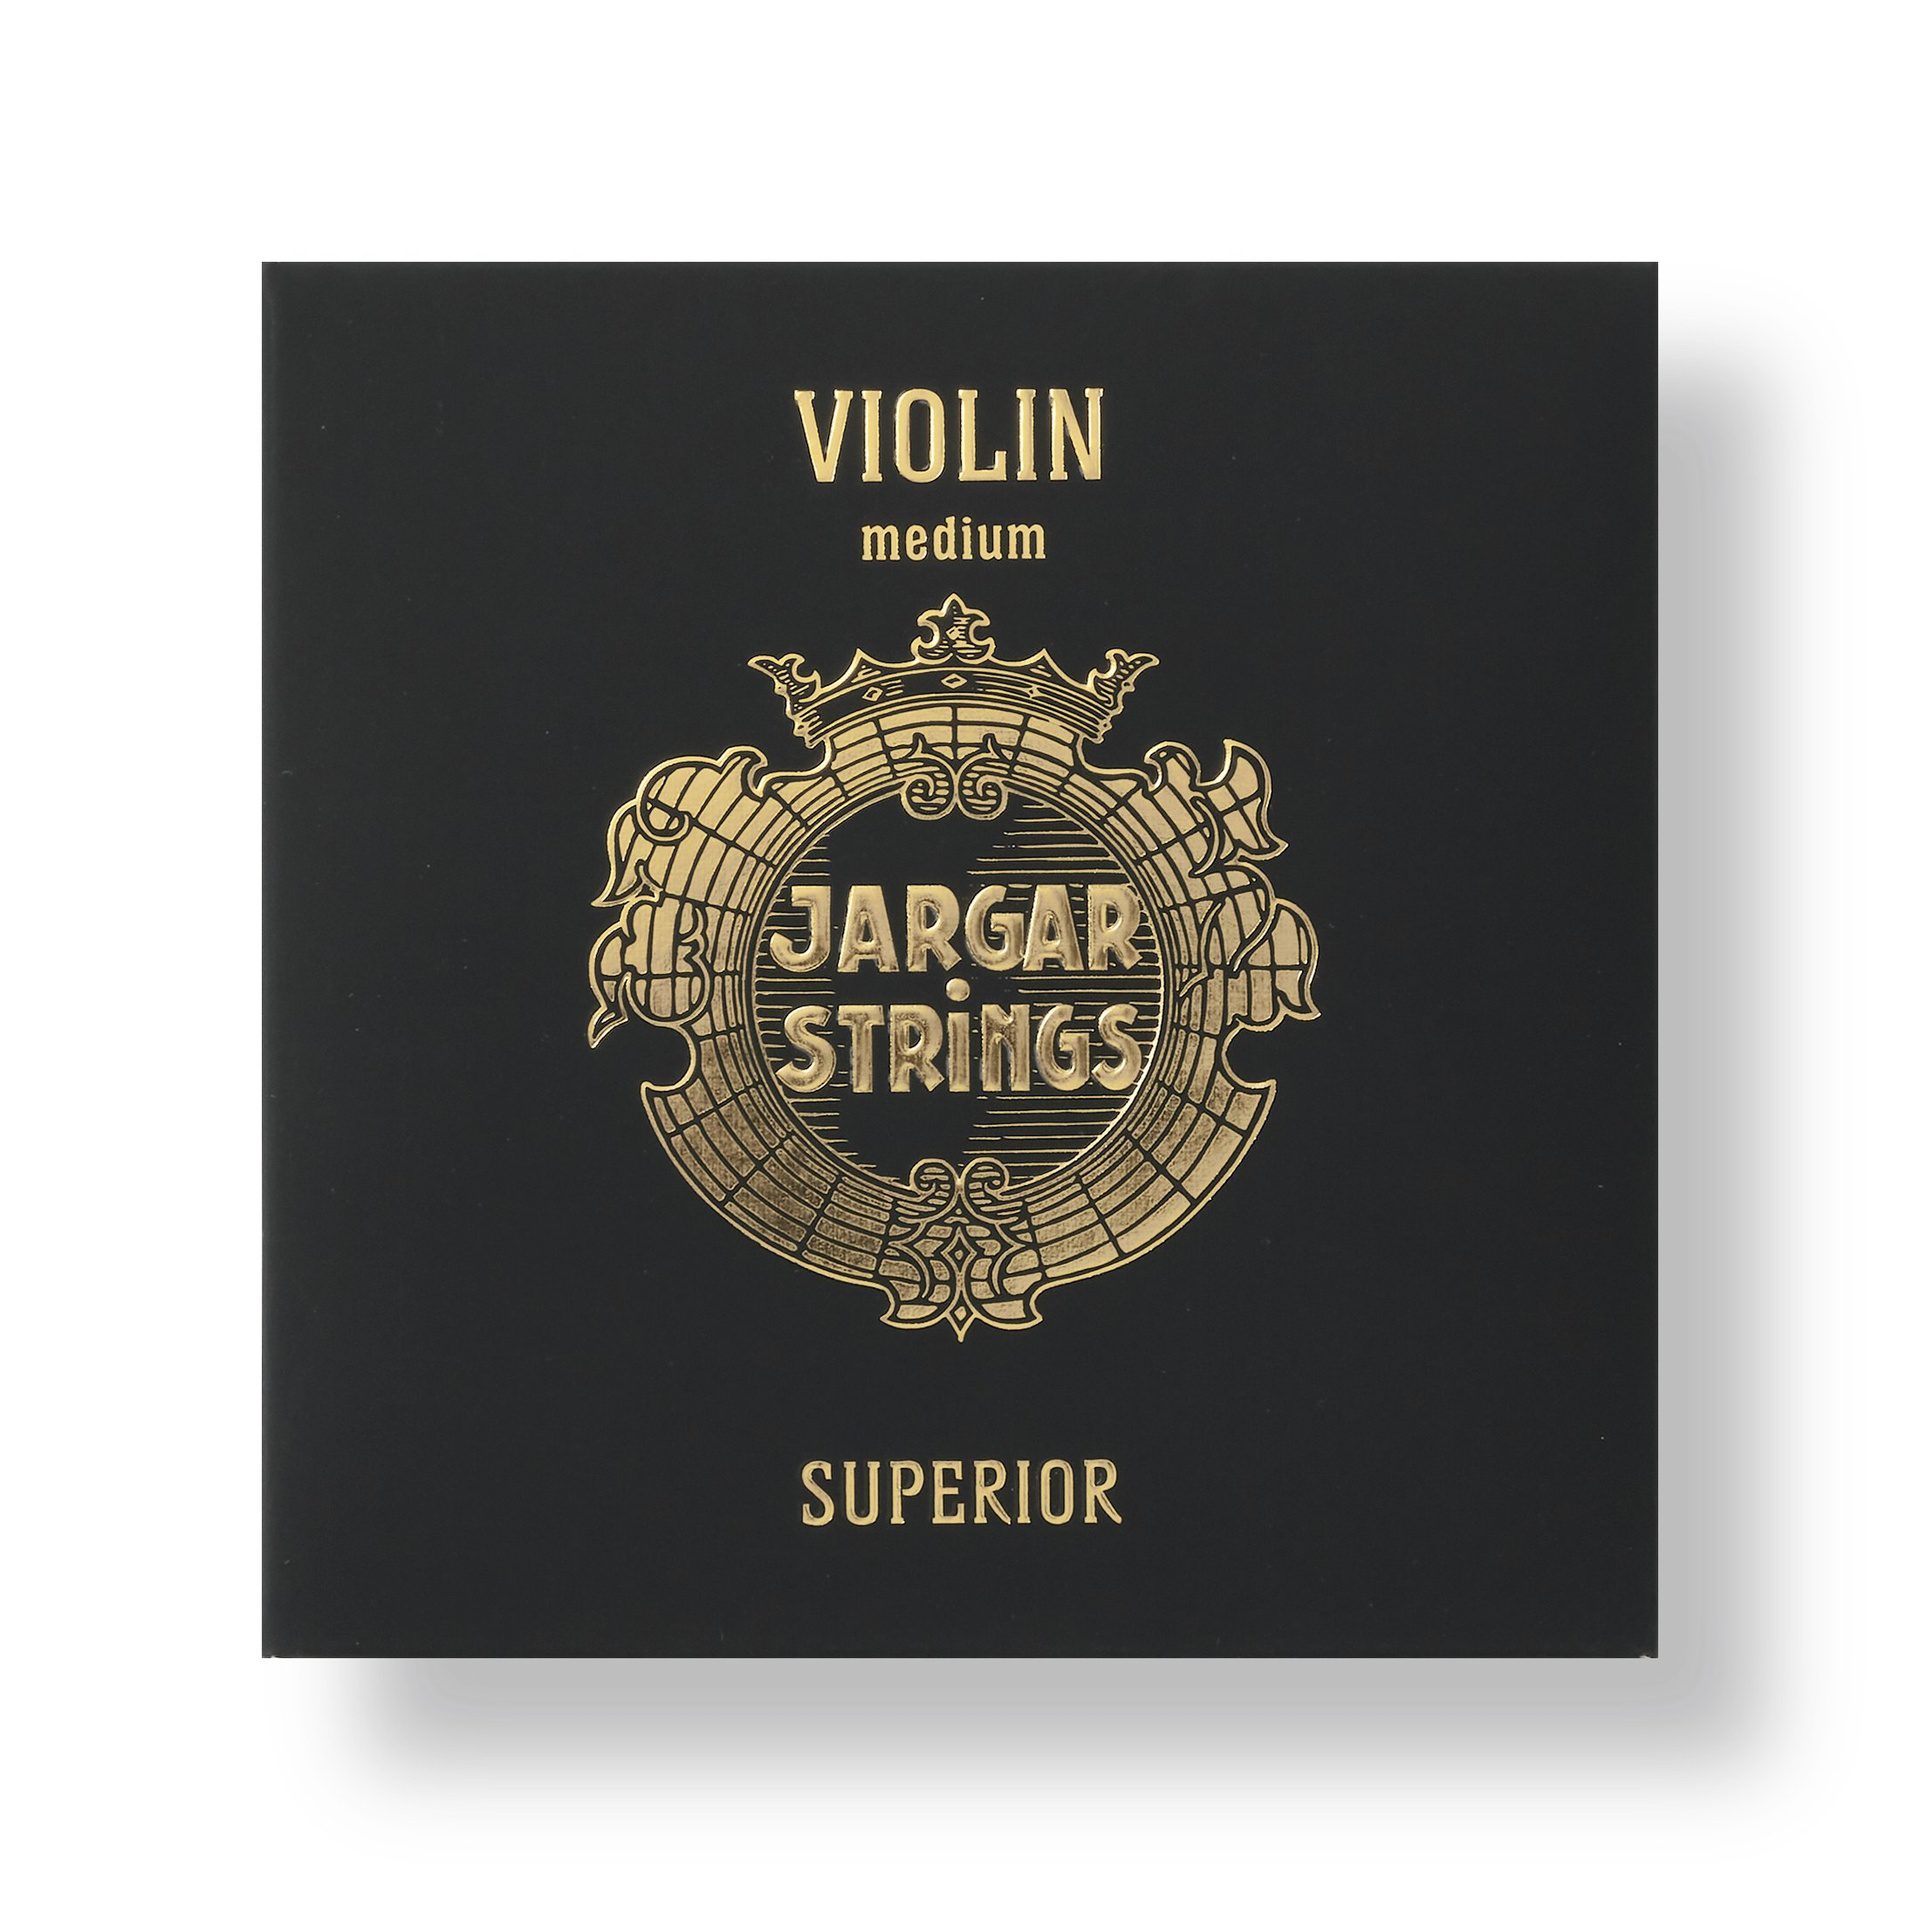 Superior Violin - Medium, Set, 4/4